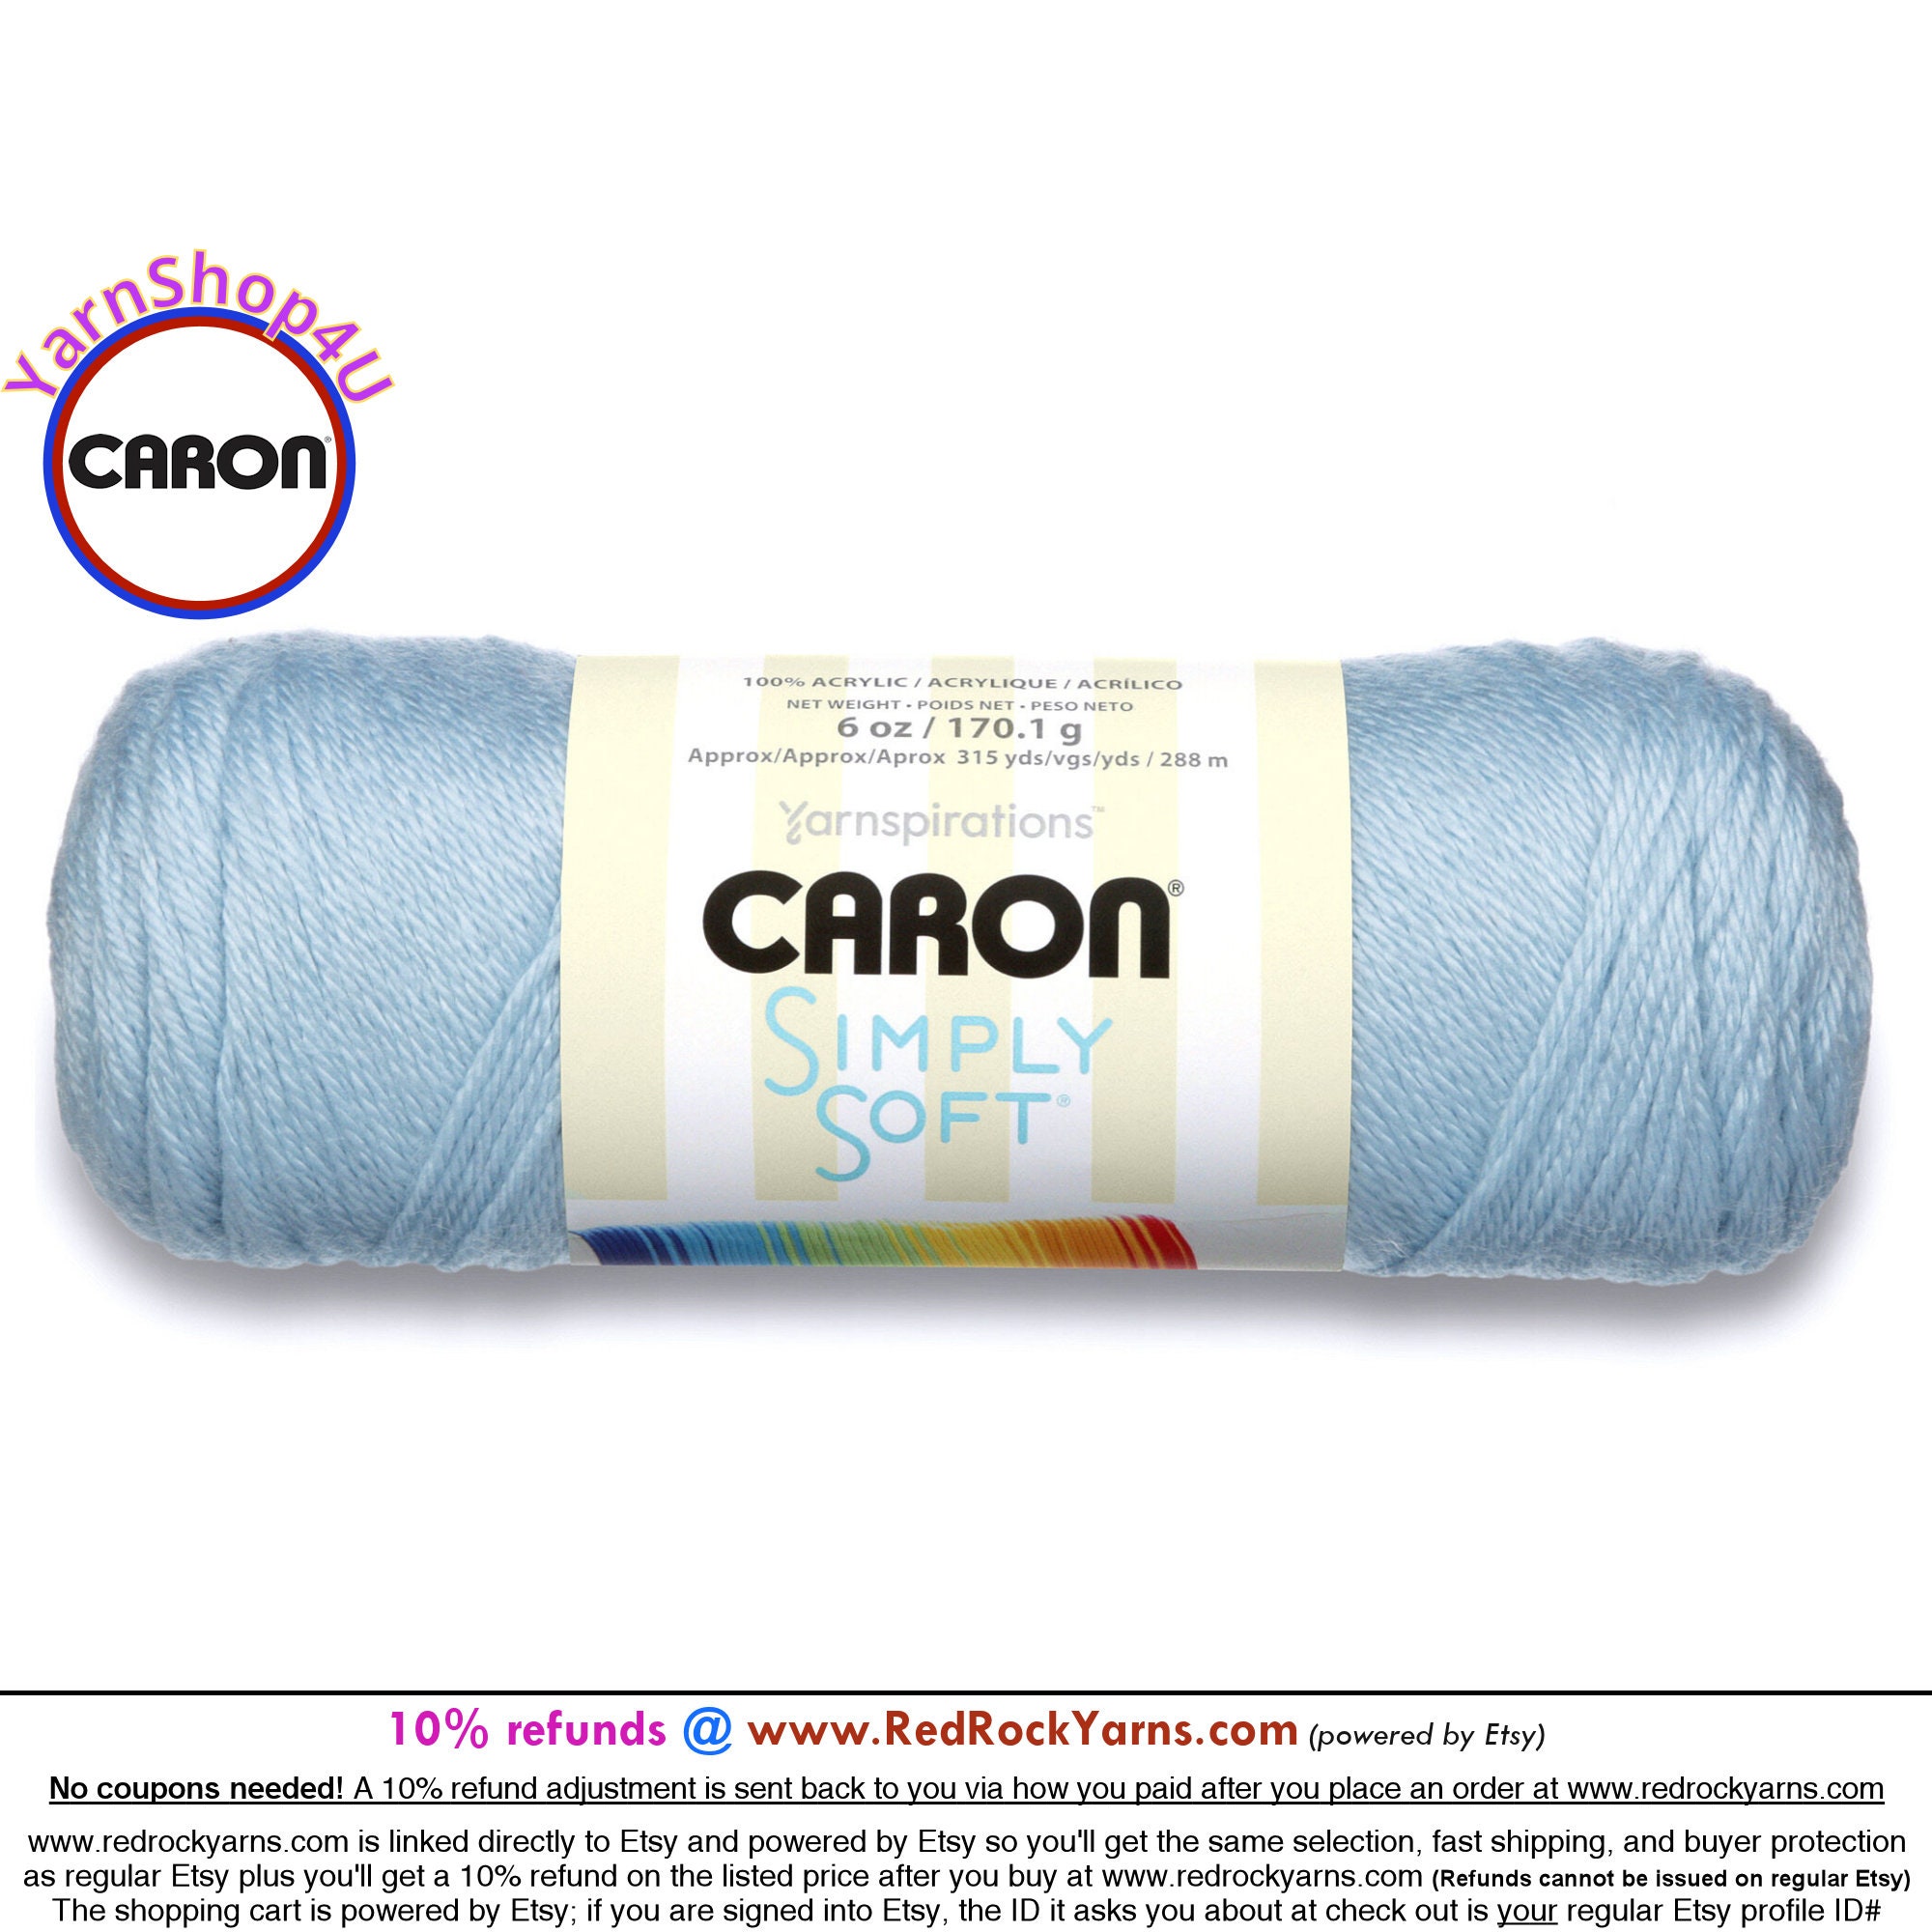 SOFT BLUE Caron Simply Soft 6oz / 315yds 170g / 288m 100% Acrylic